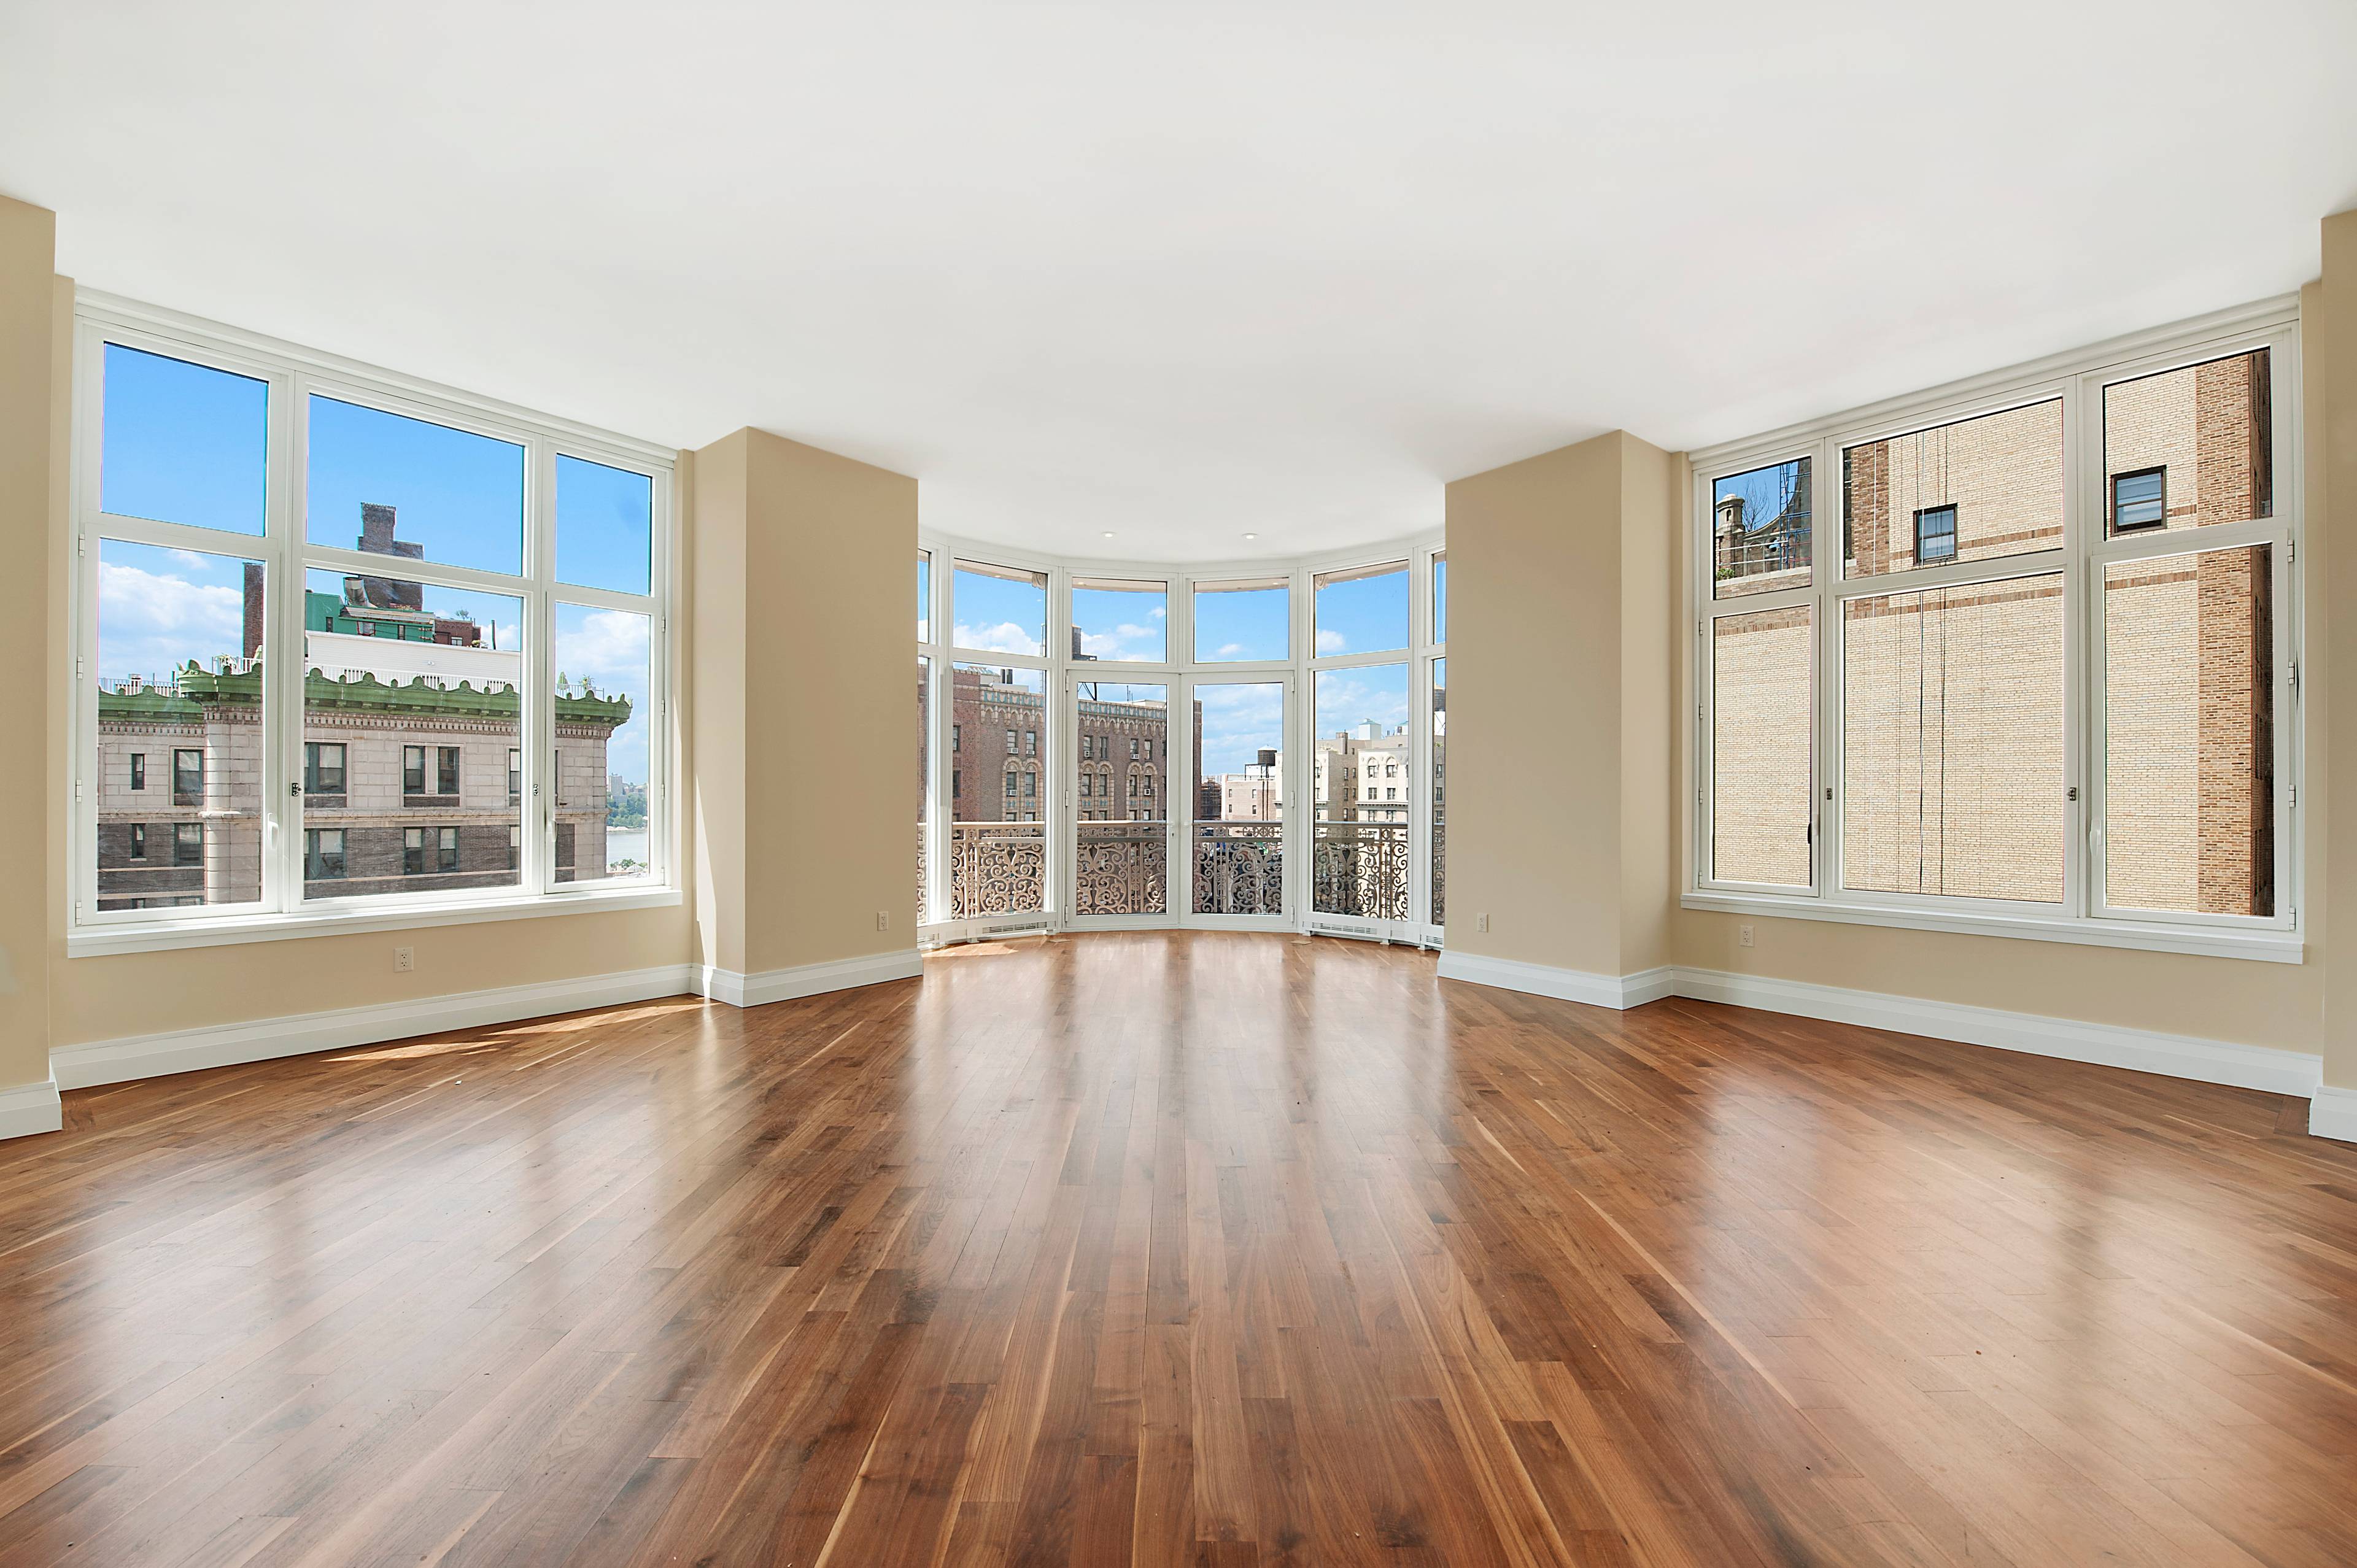 Five Bedroom Four Bathroom Luxury Condo For Rent in Upper West Side Manhattan